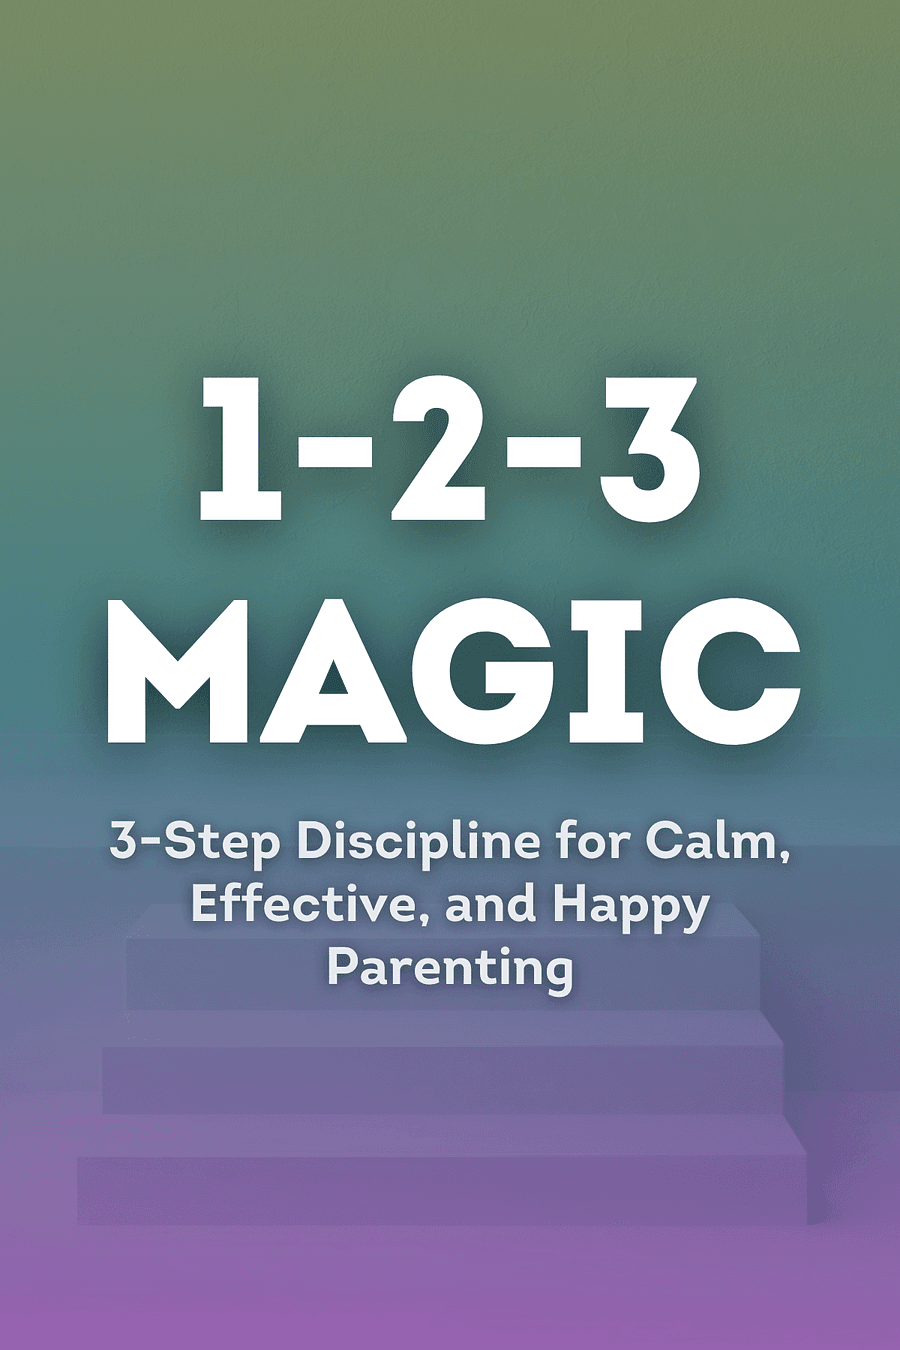 1-2-3 Magic by Thomas W. Phelan - Book Summary